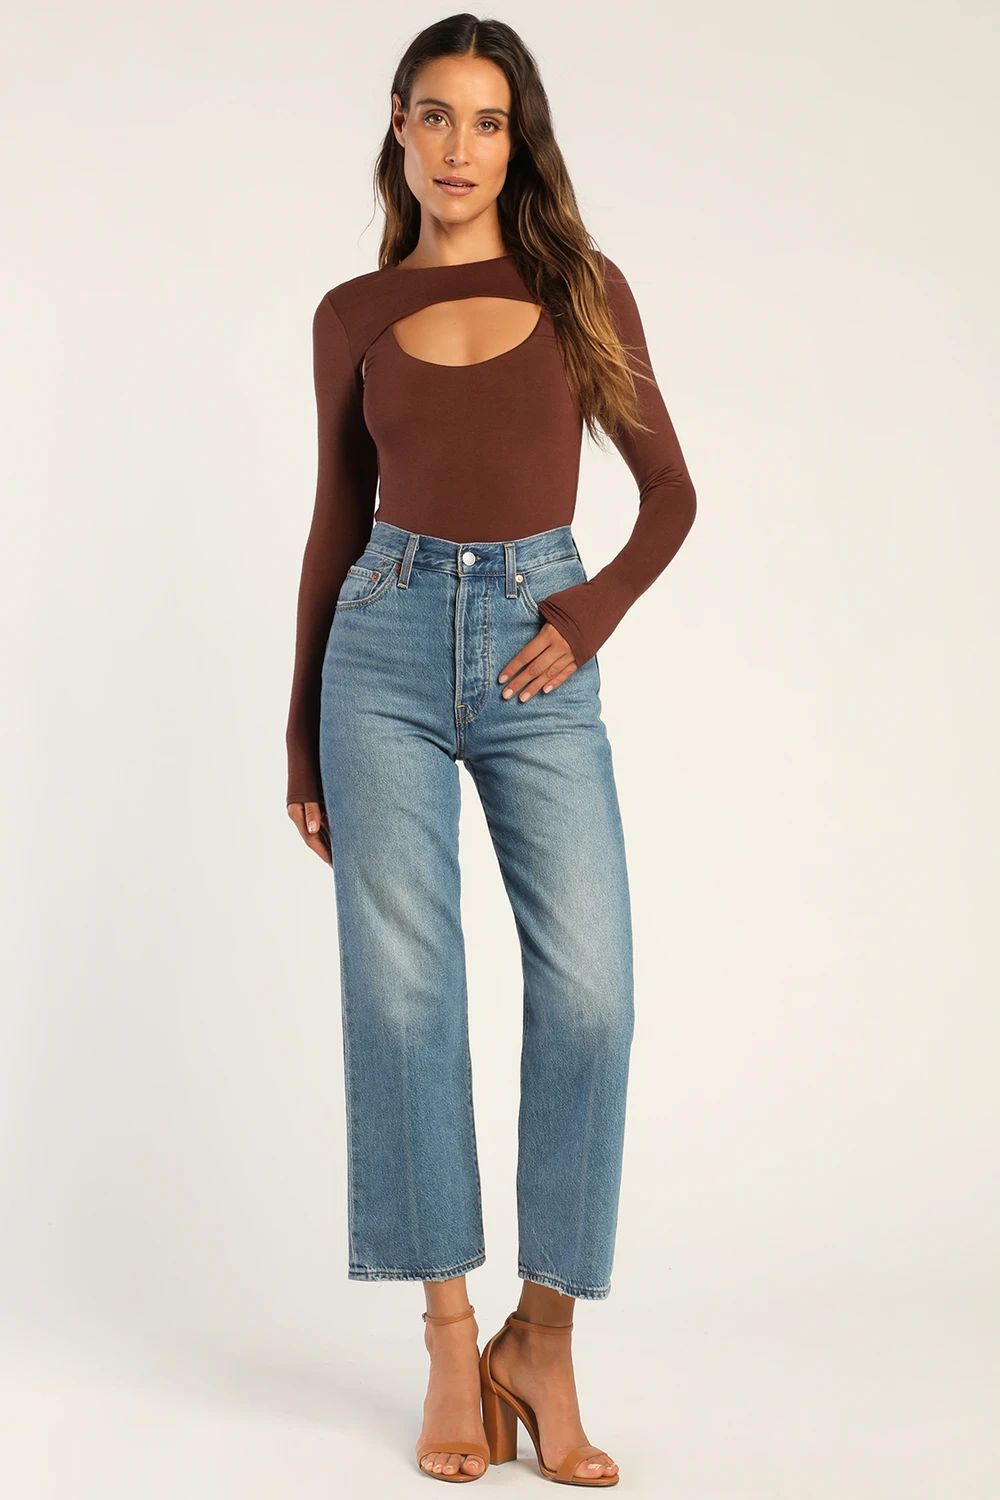 Flirtatious Appeal Brown Long Sleeve Cutout Bodysuit | Lulus (US)